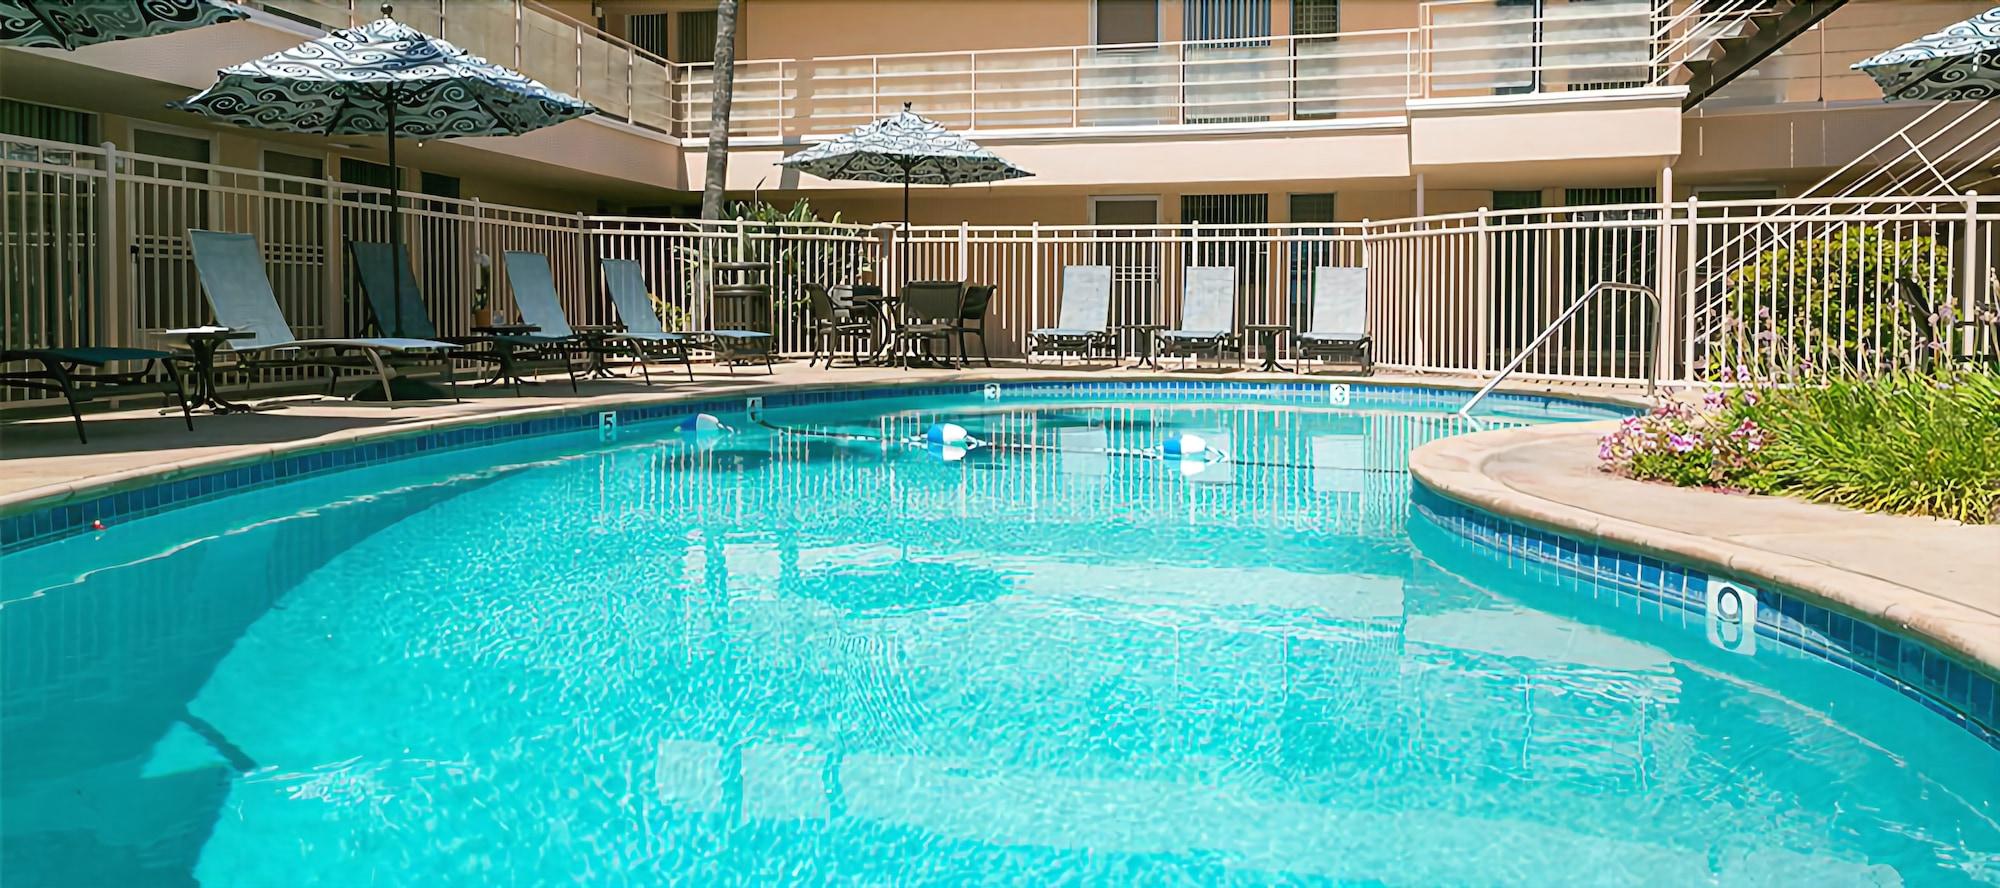 La Jolla Riviera Inn image